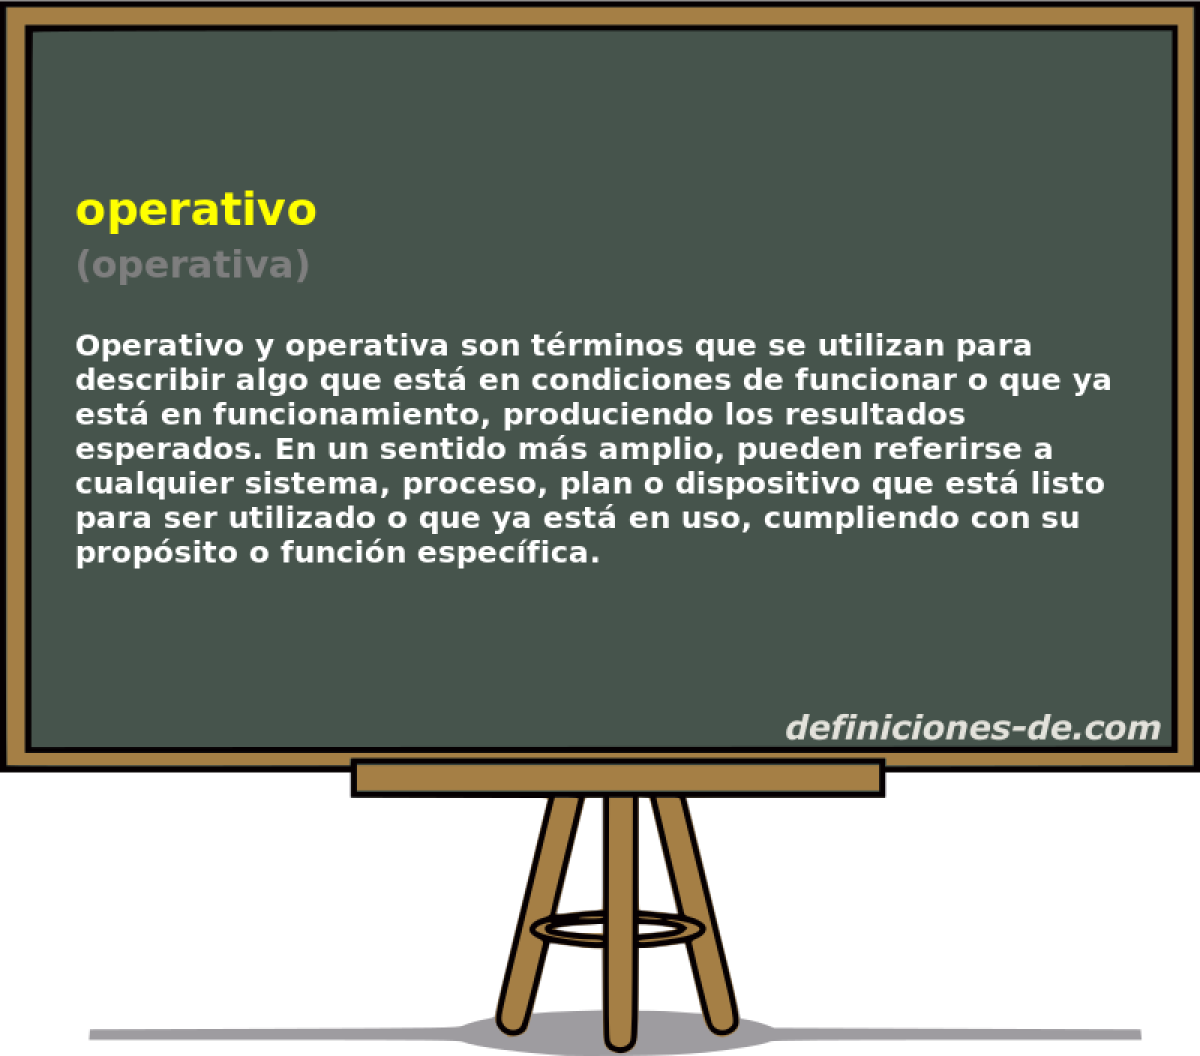 operativo (operativa)